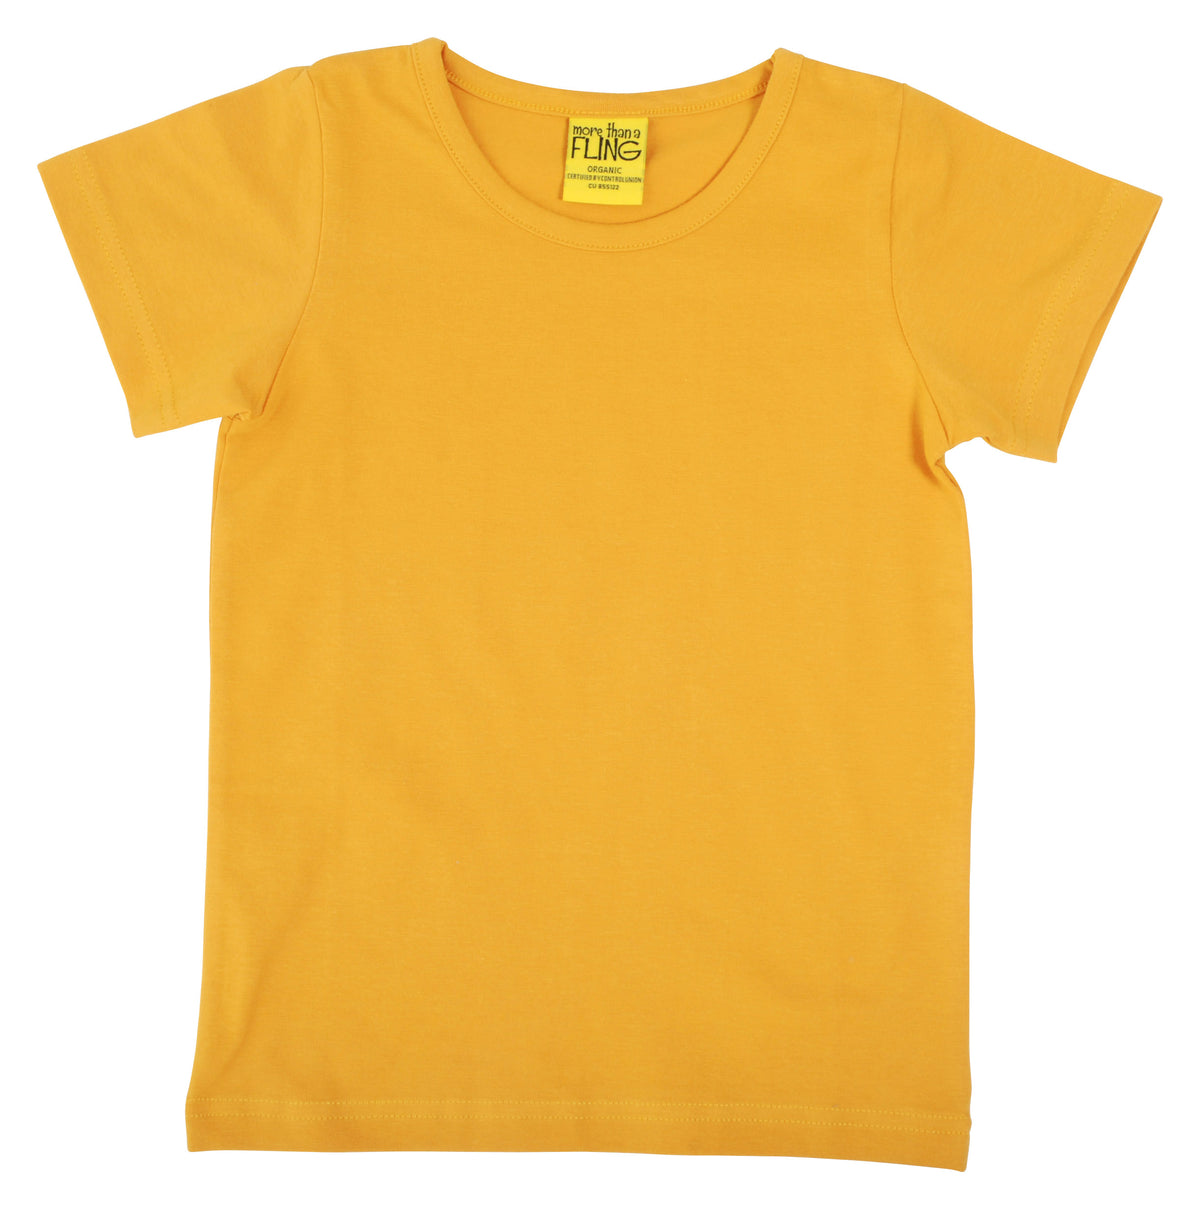 More Than A Fling ADULT - T-Shirt Sunflower Yellow